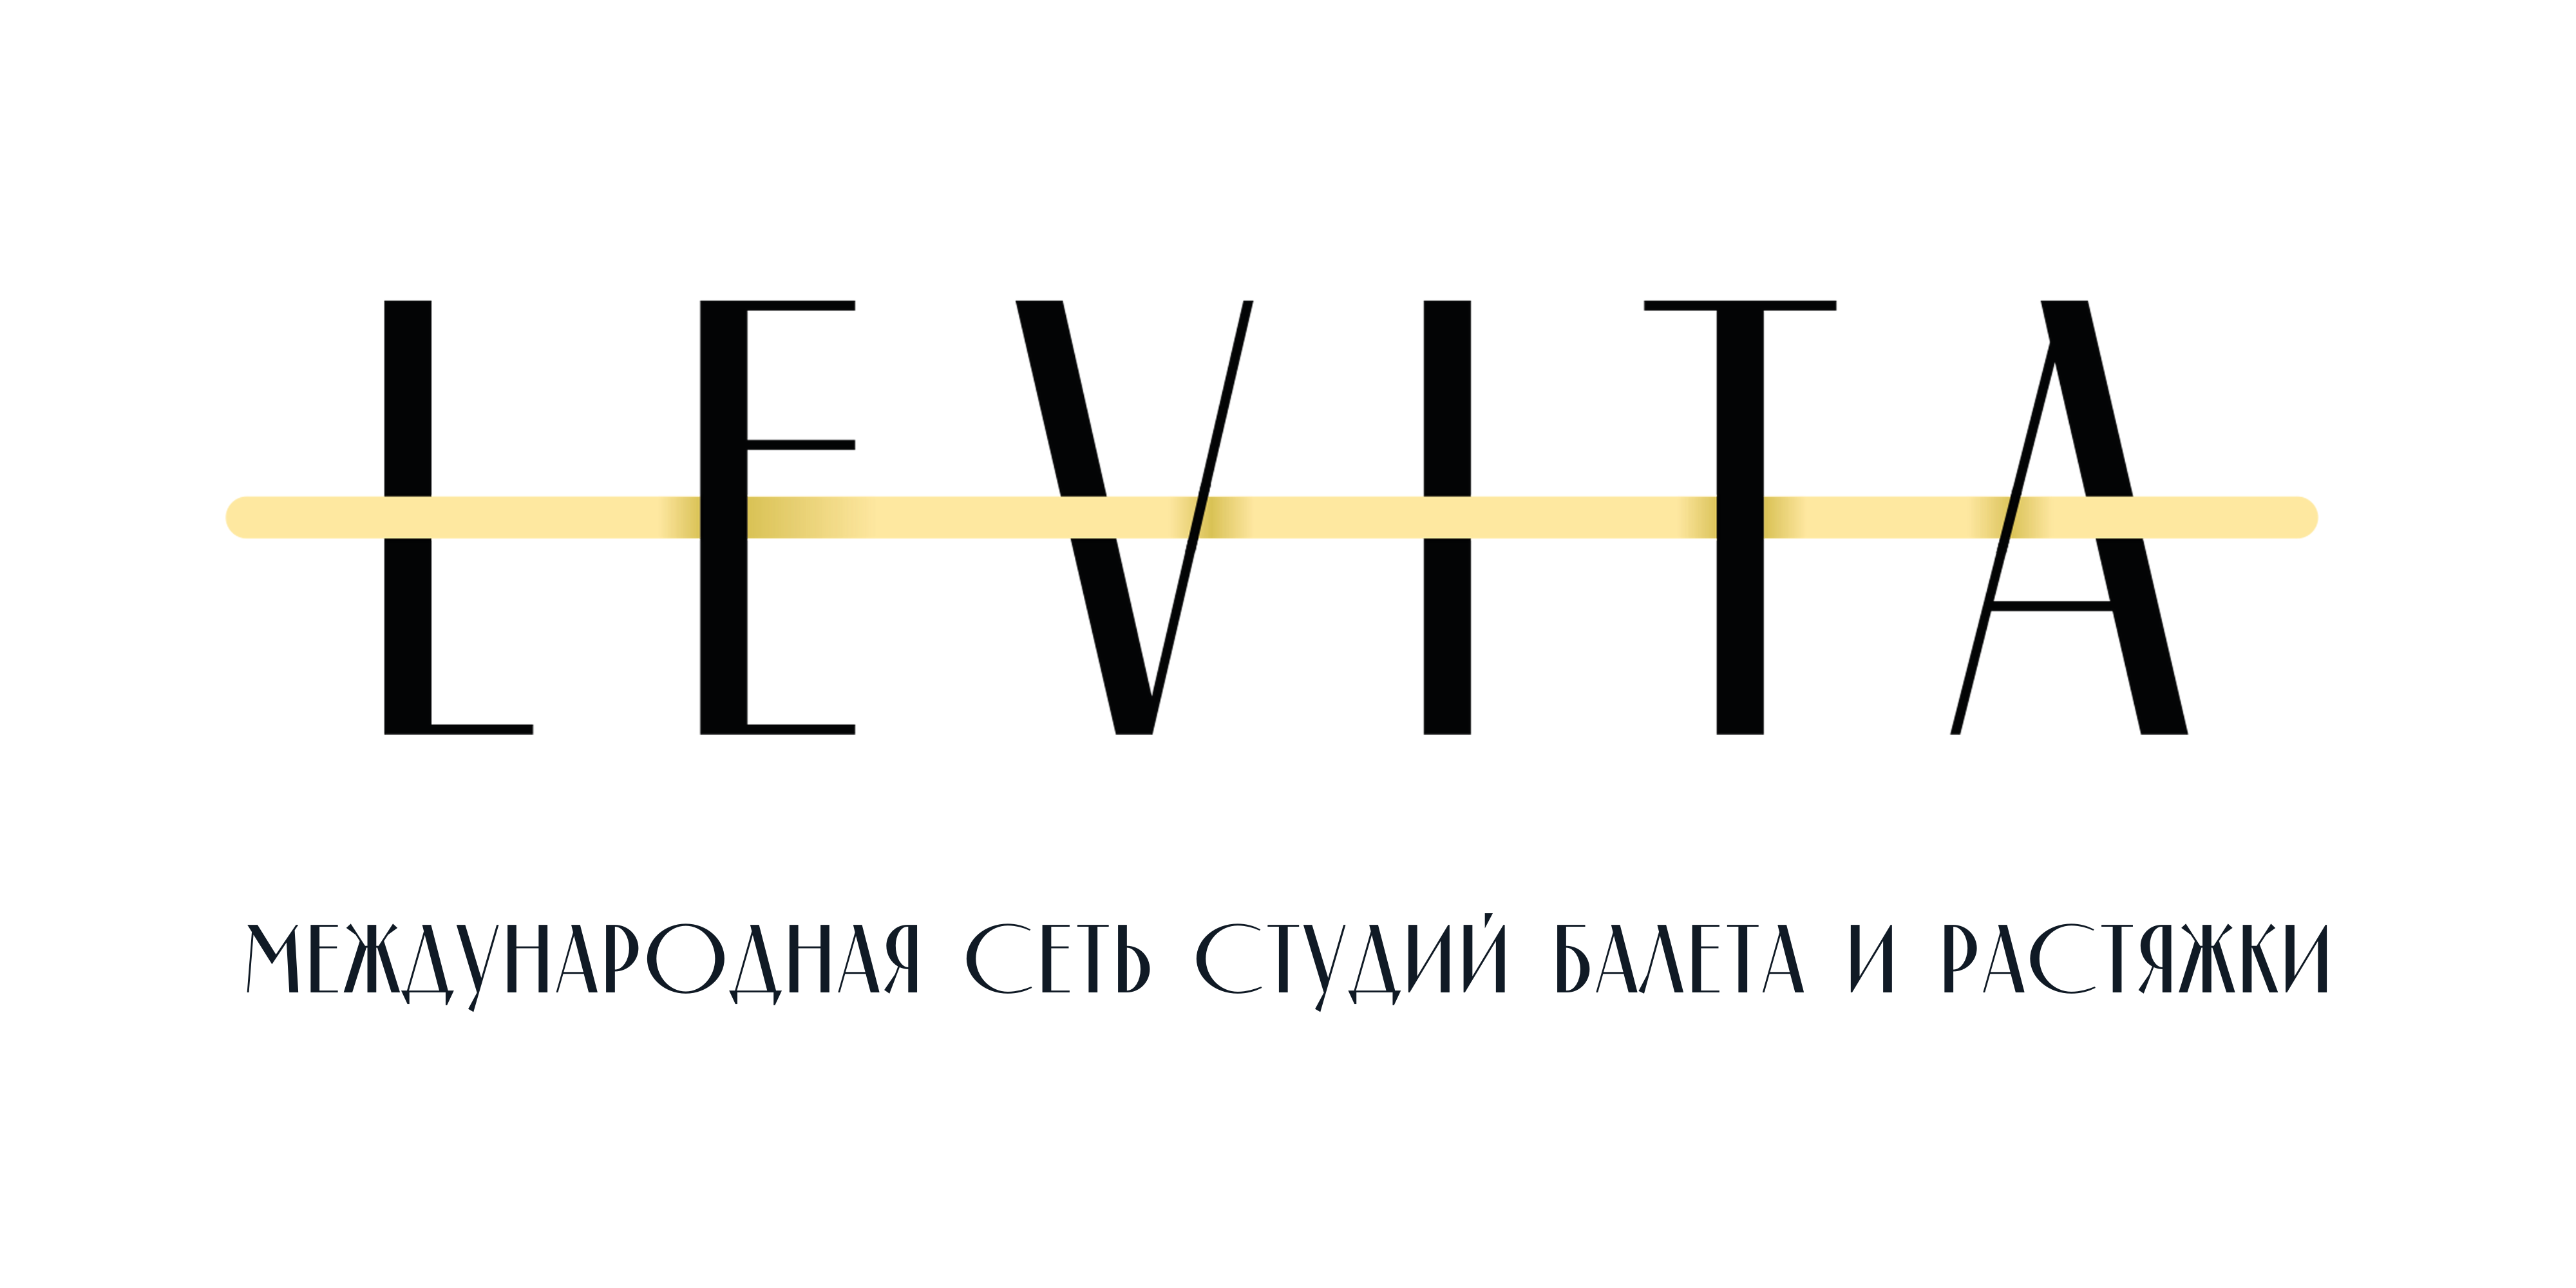 Левита студия балета отзывы. Levita студия балета. Студия растяжки Levita. Левита студия балета и растяжки логотип. Левита логотип.